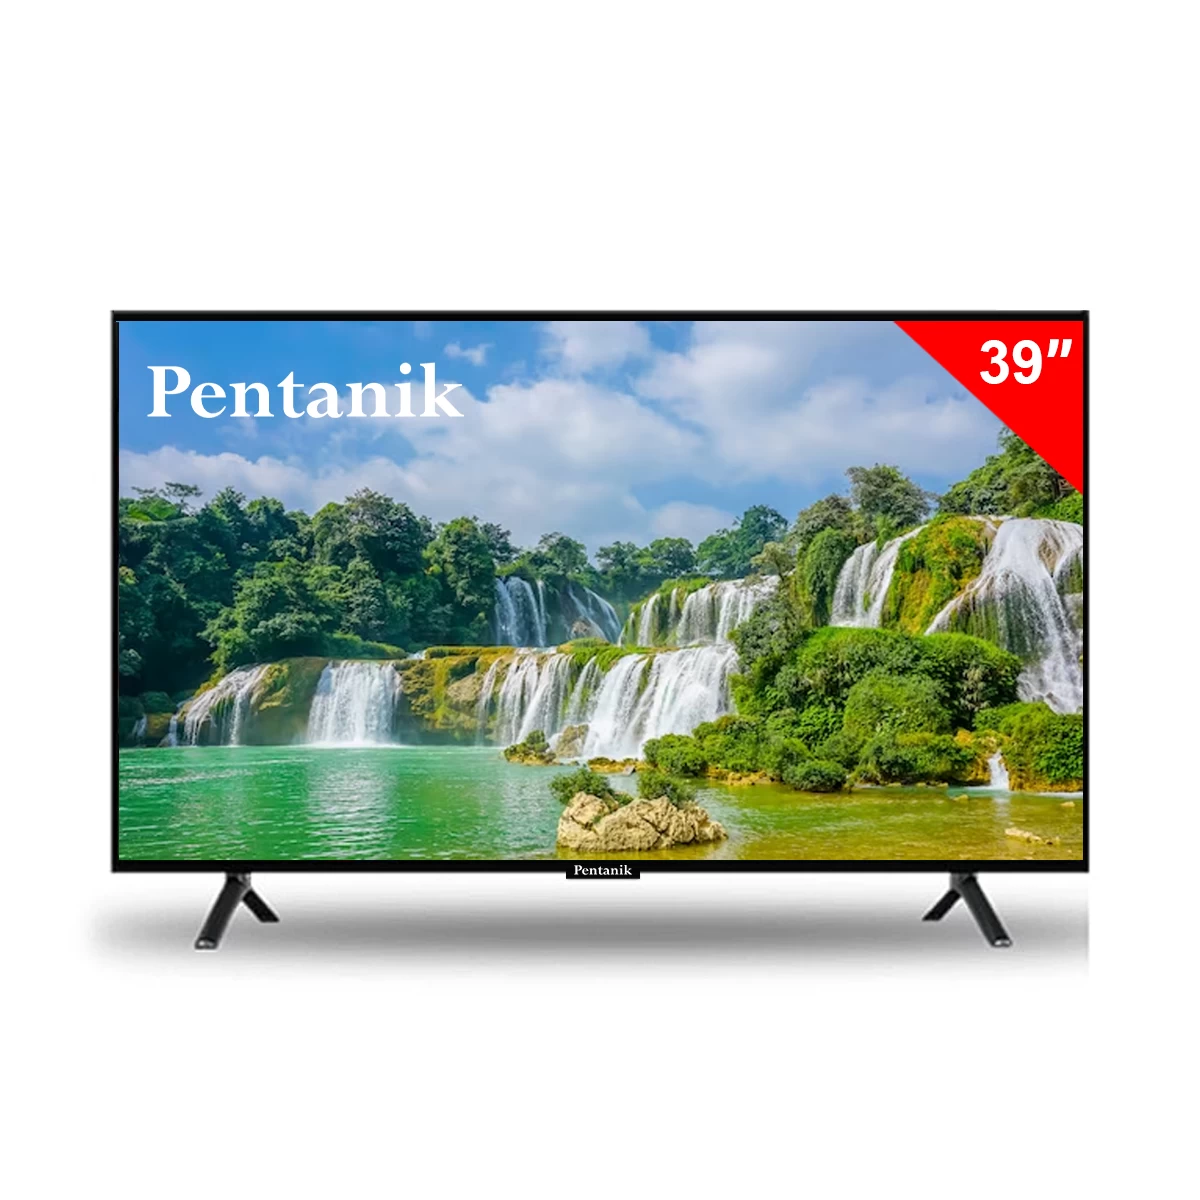 Pentanik 39 Inch Smart Android TV